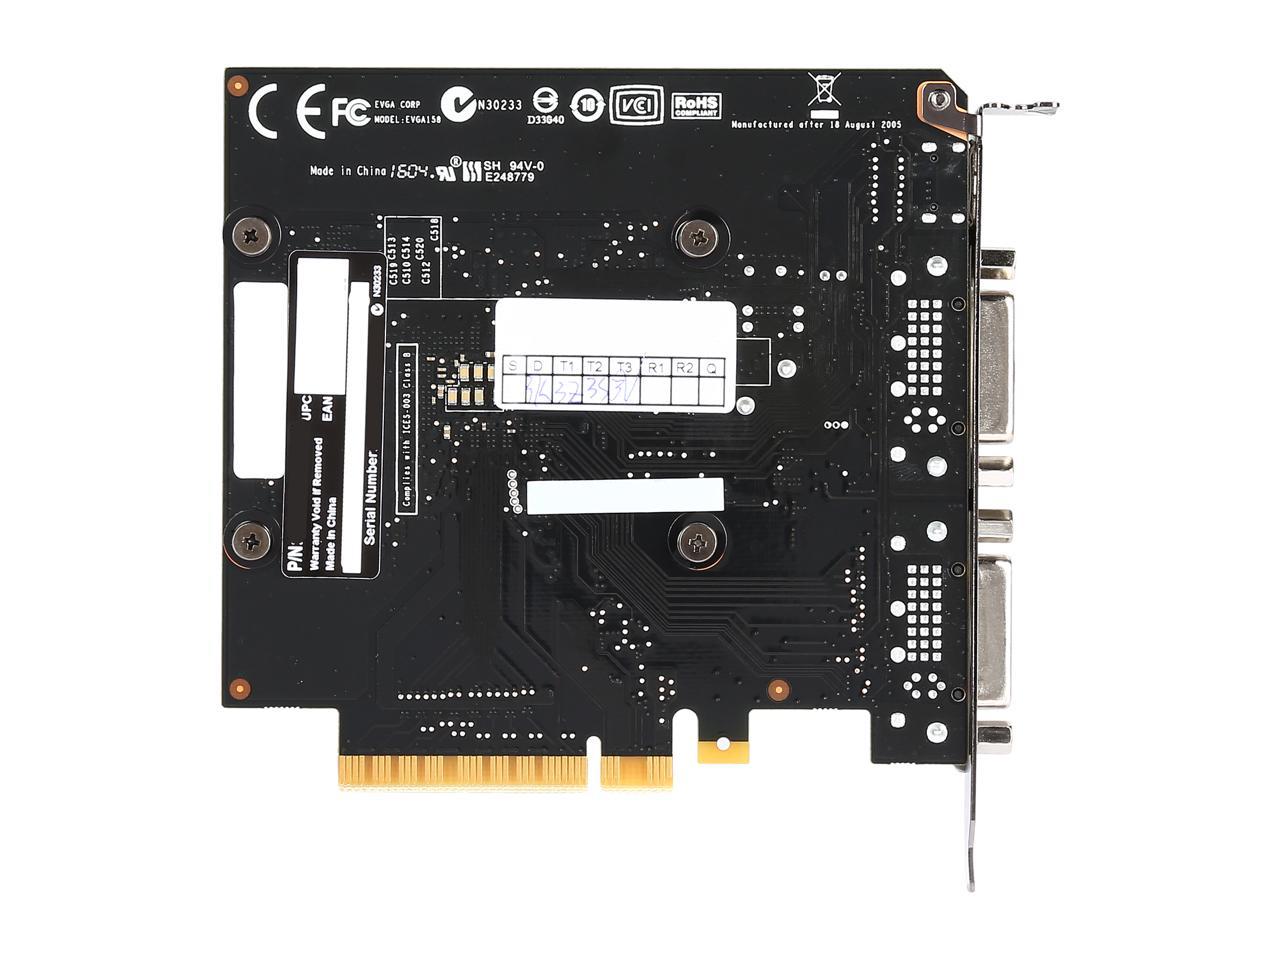 EVGA GeForce GT 710 DirectX 12 02G-P3-2717-KR 2GB 64-Bit DDR3 PCI Express 2.0 Video Card